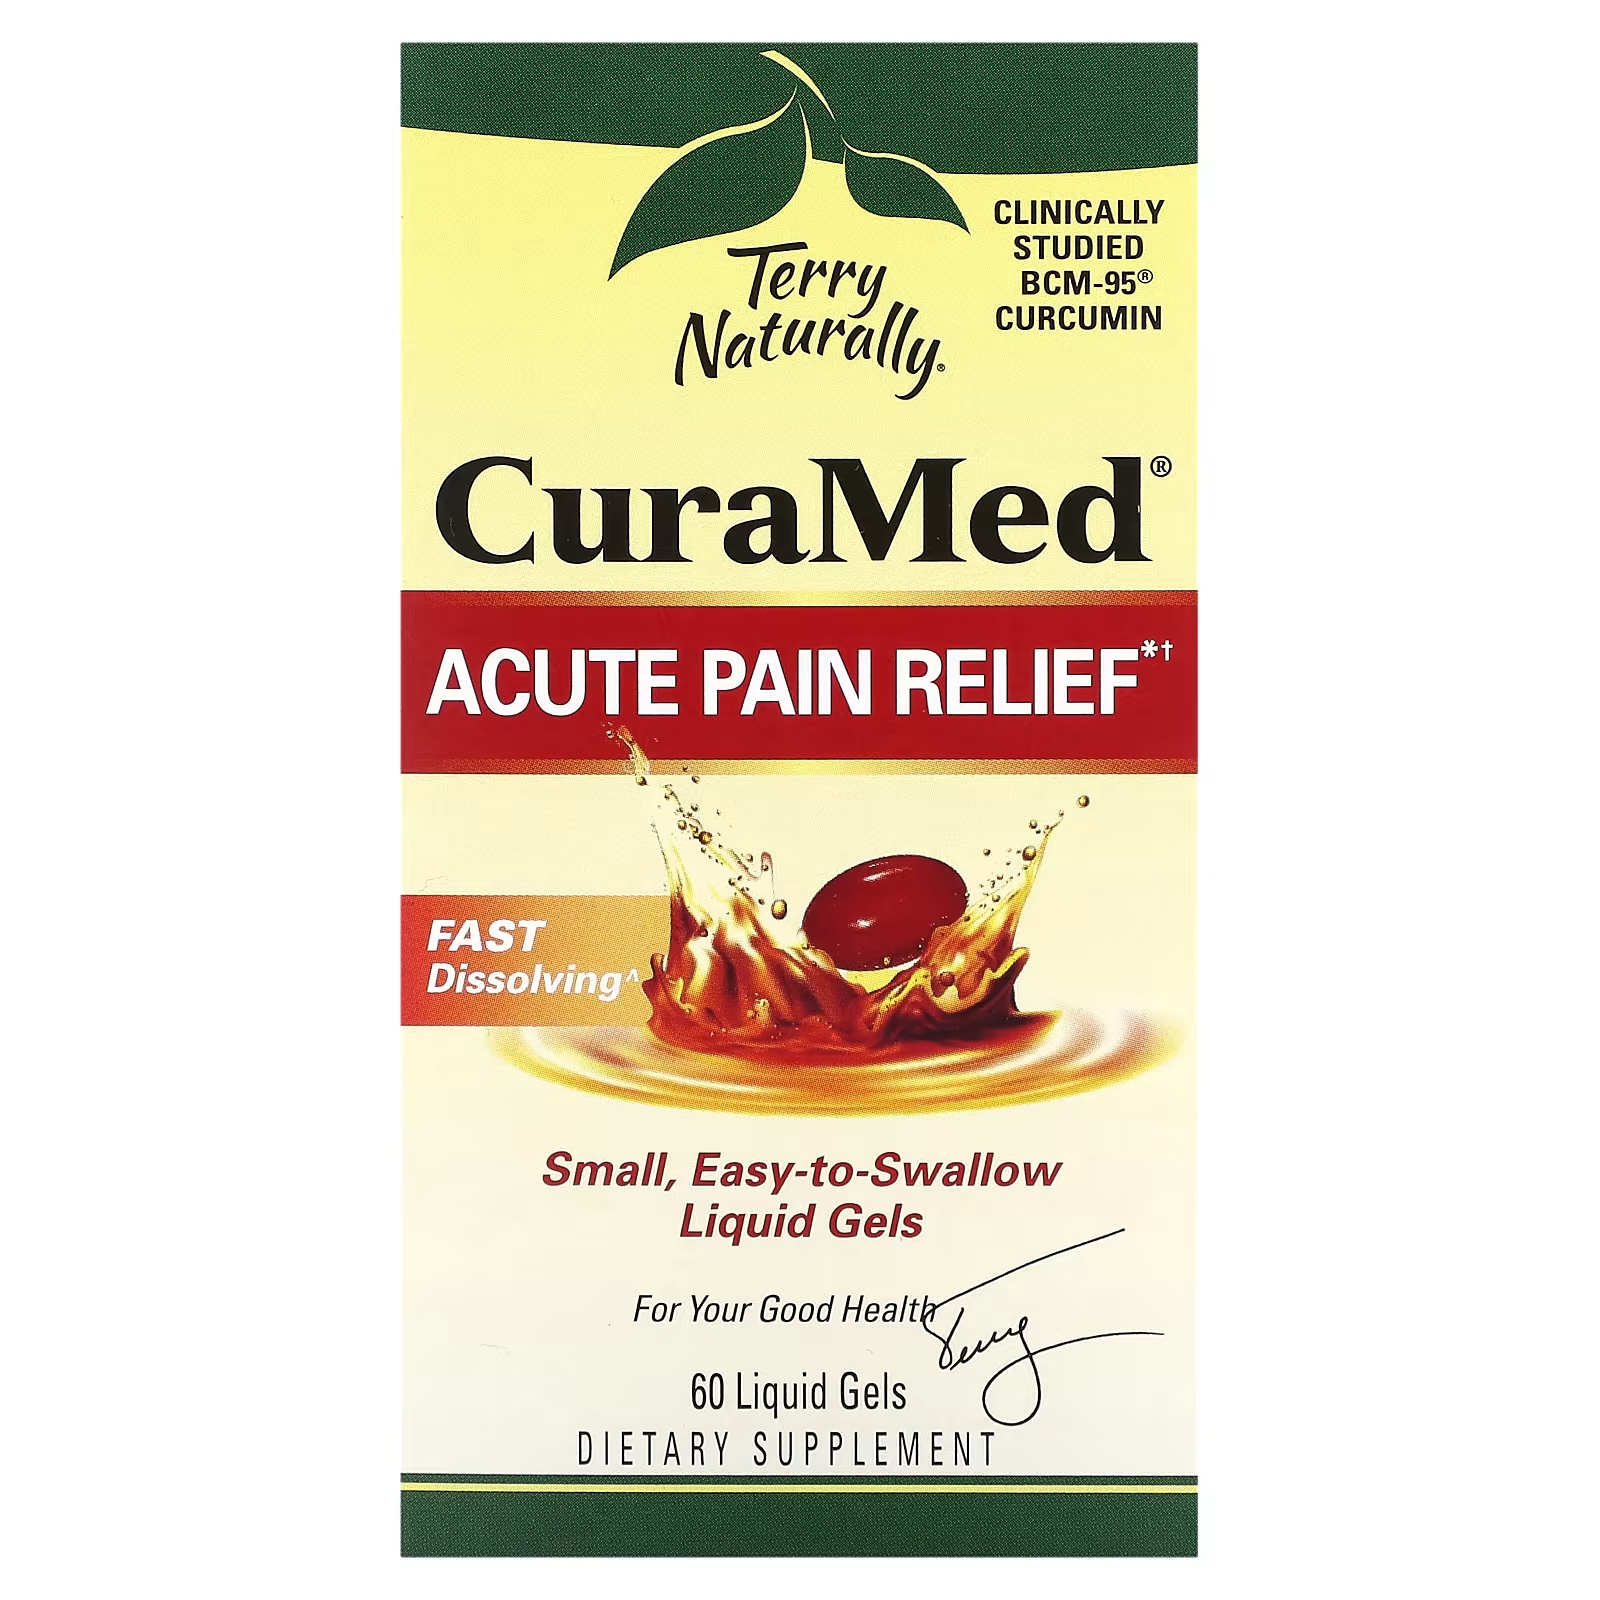 Обезболивающее средство Terry Naturally CuraMed от острой боли, 60 жидких гелей 8pcs tiger balm pain relief patch fast relief knee pain body aches pains